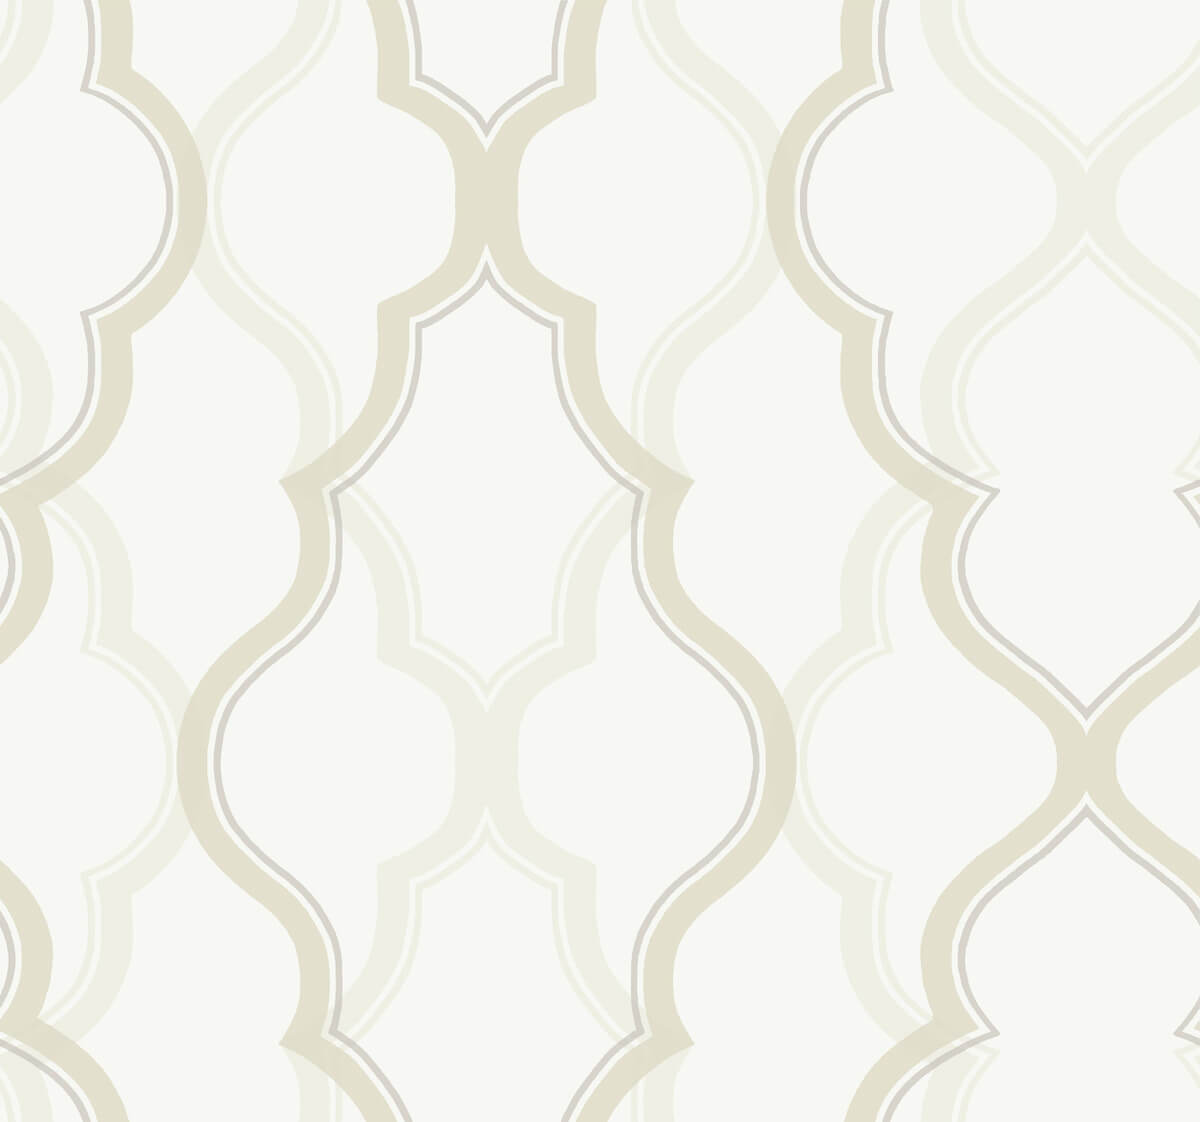 Candice Olson Modern Artisan II Double Damask Wallpaper - Cream